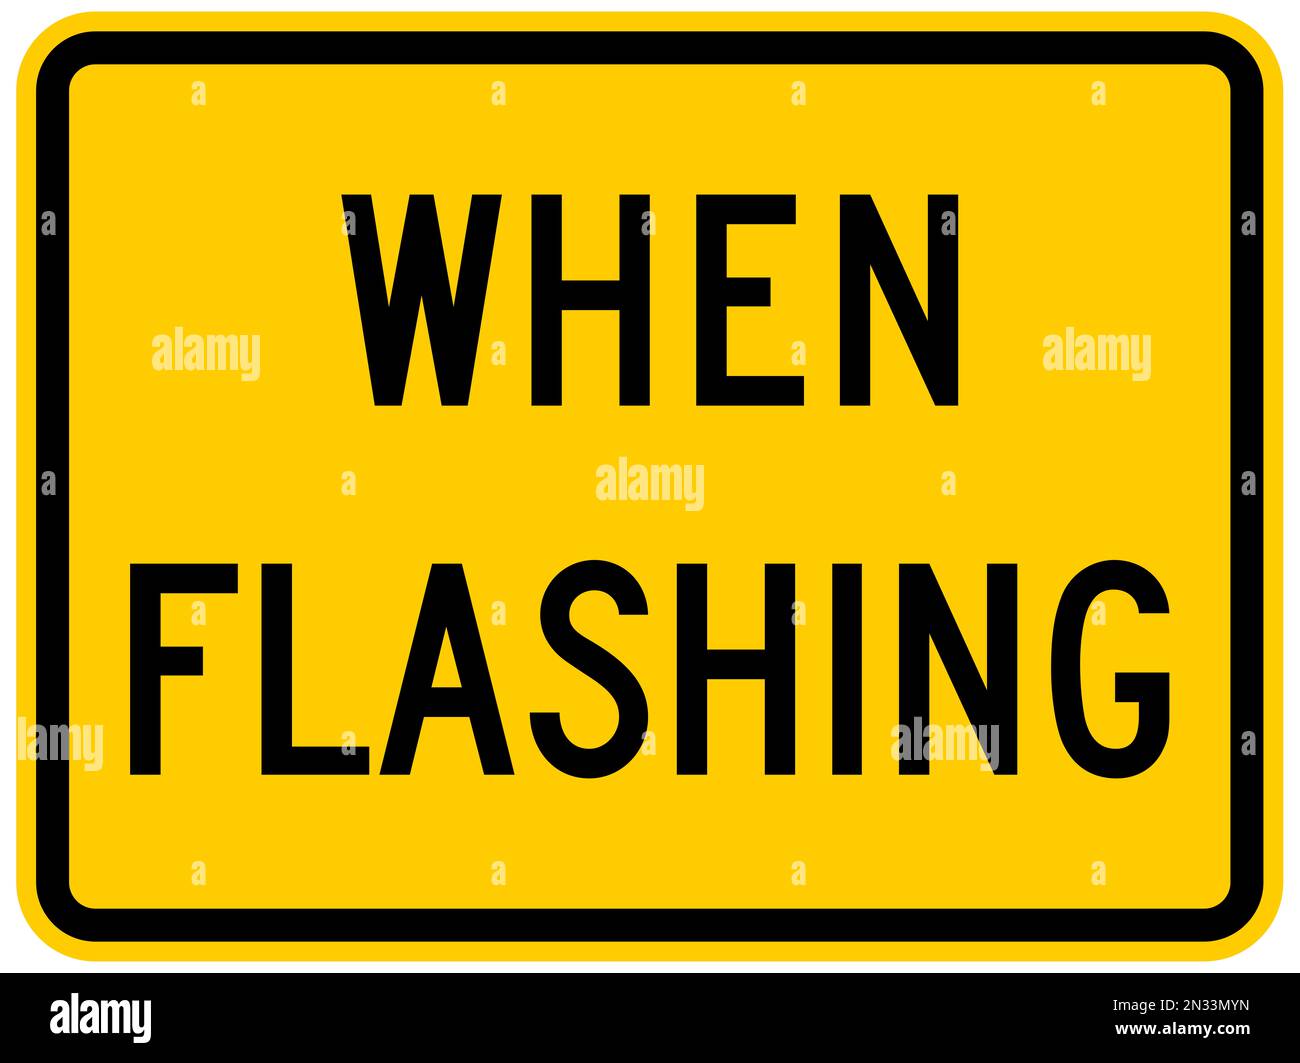 When flashing warning sign Stock Photo